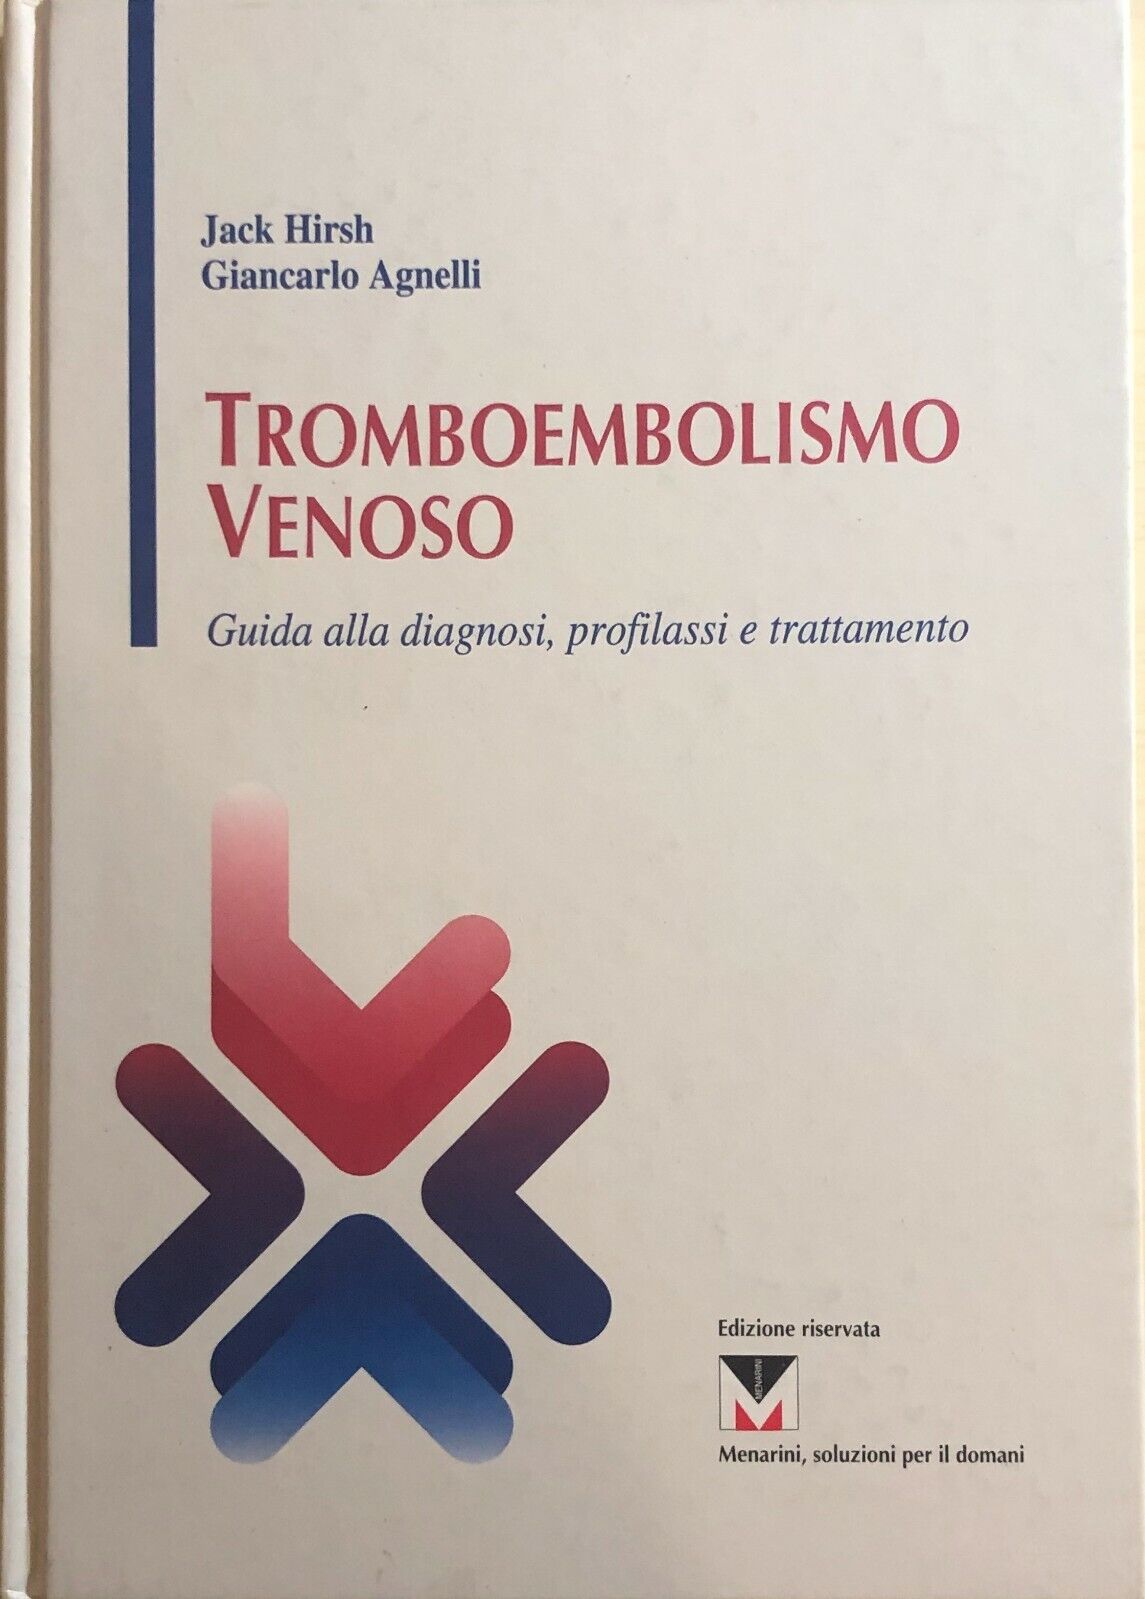 Tromboembolismo venoso di Aa.vv., 1993, Menarini